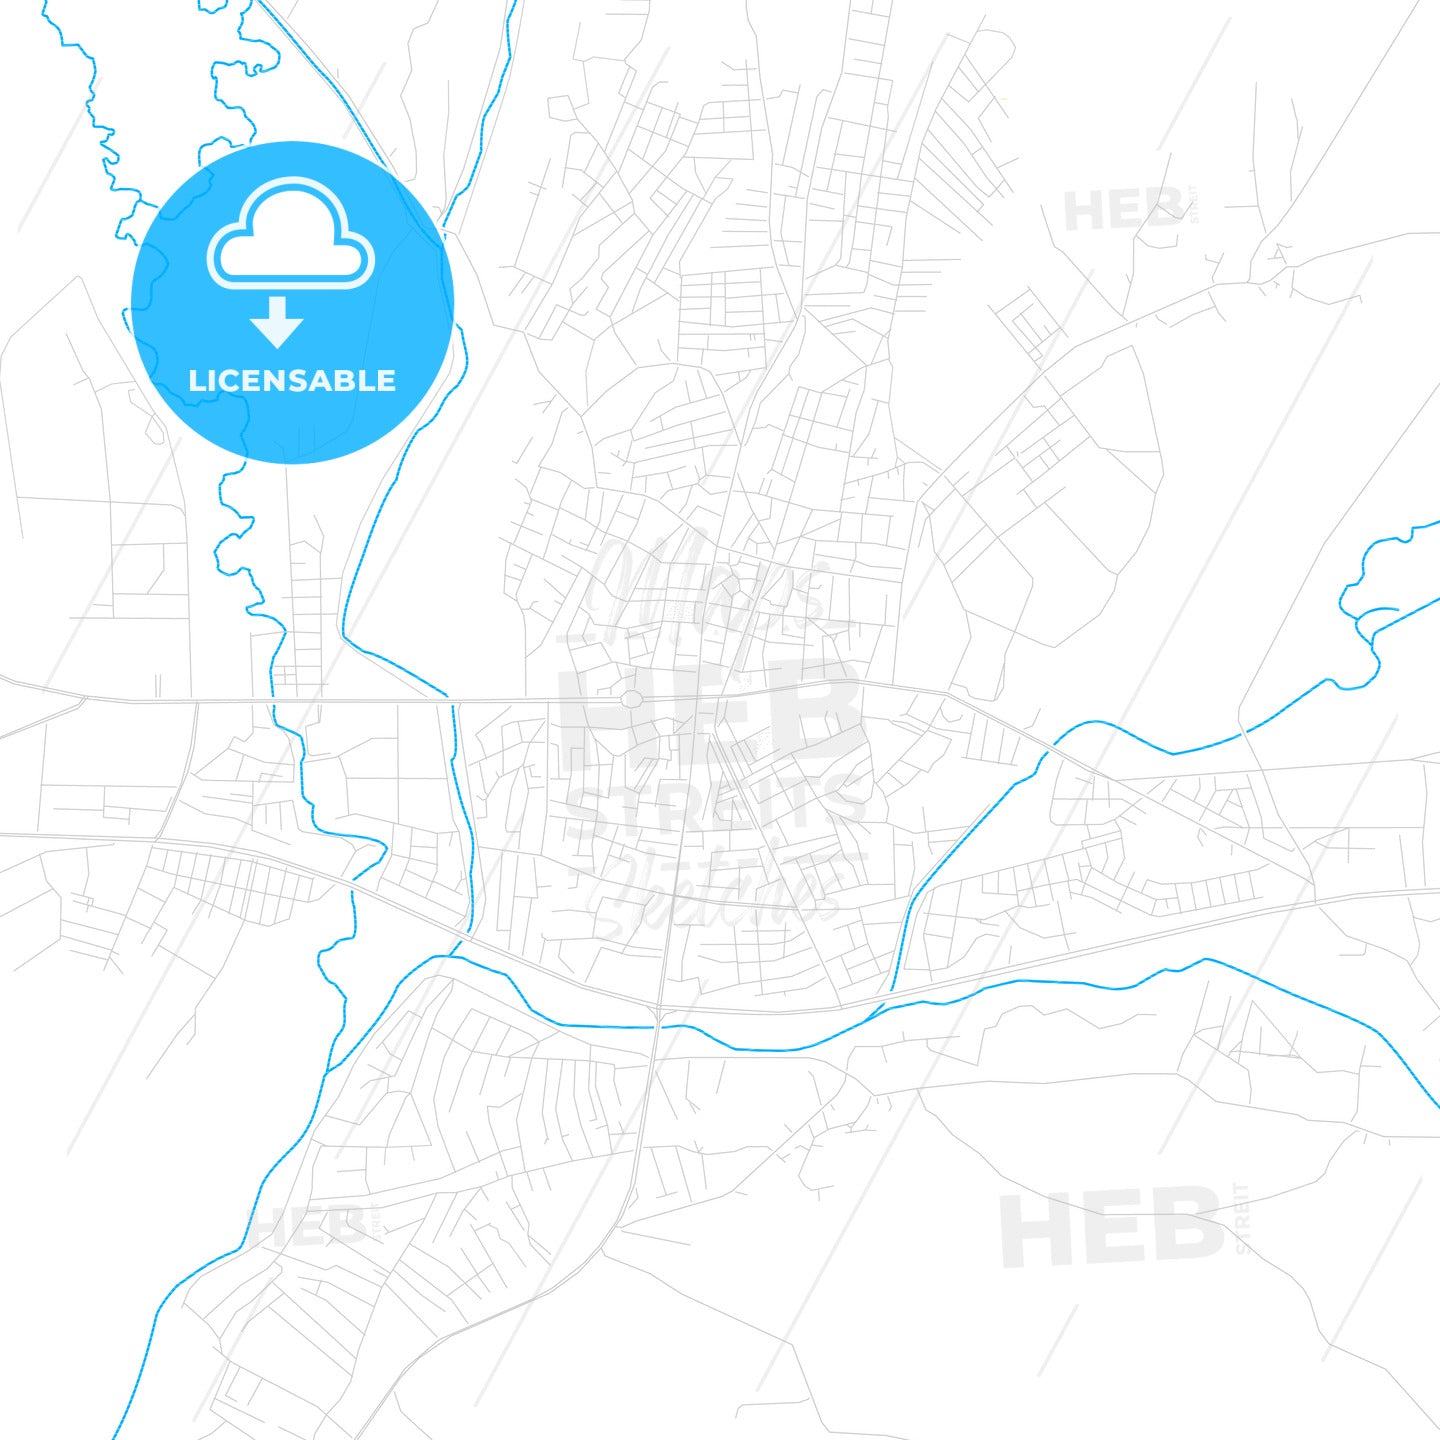 Ağrı, Turkey PDF vector map with water in focus